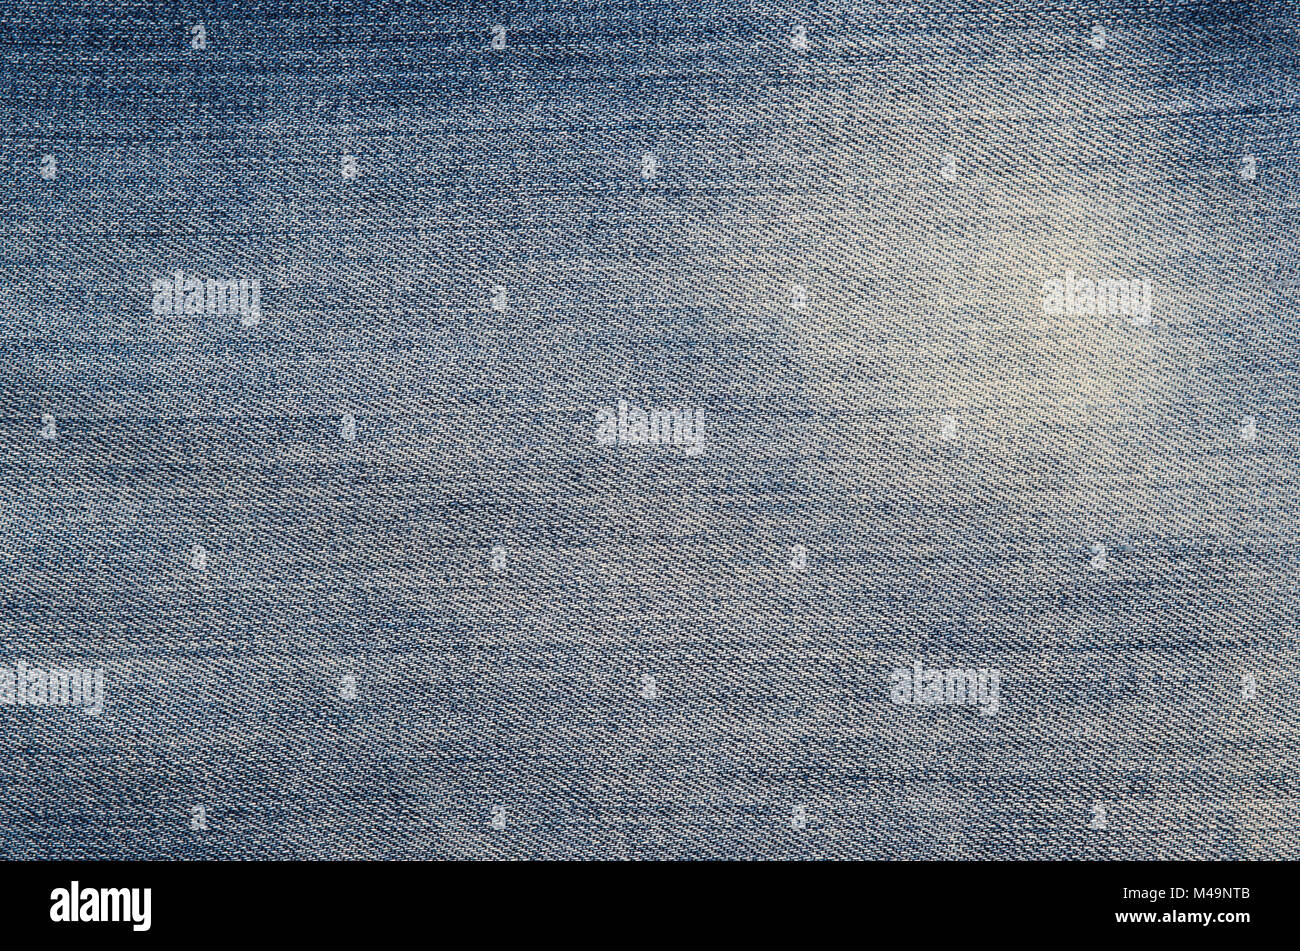 Texture of blue denim fabric. denim jeans material texture background ...